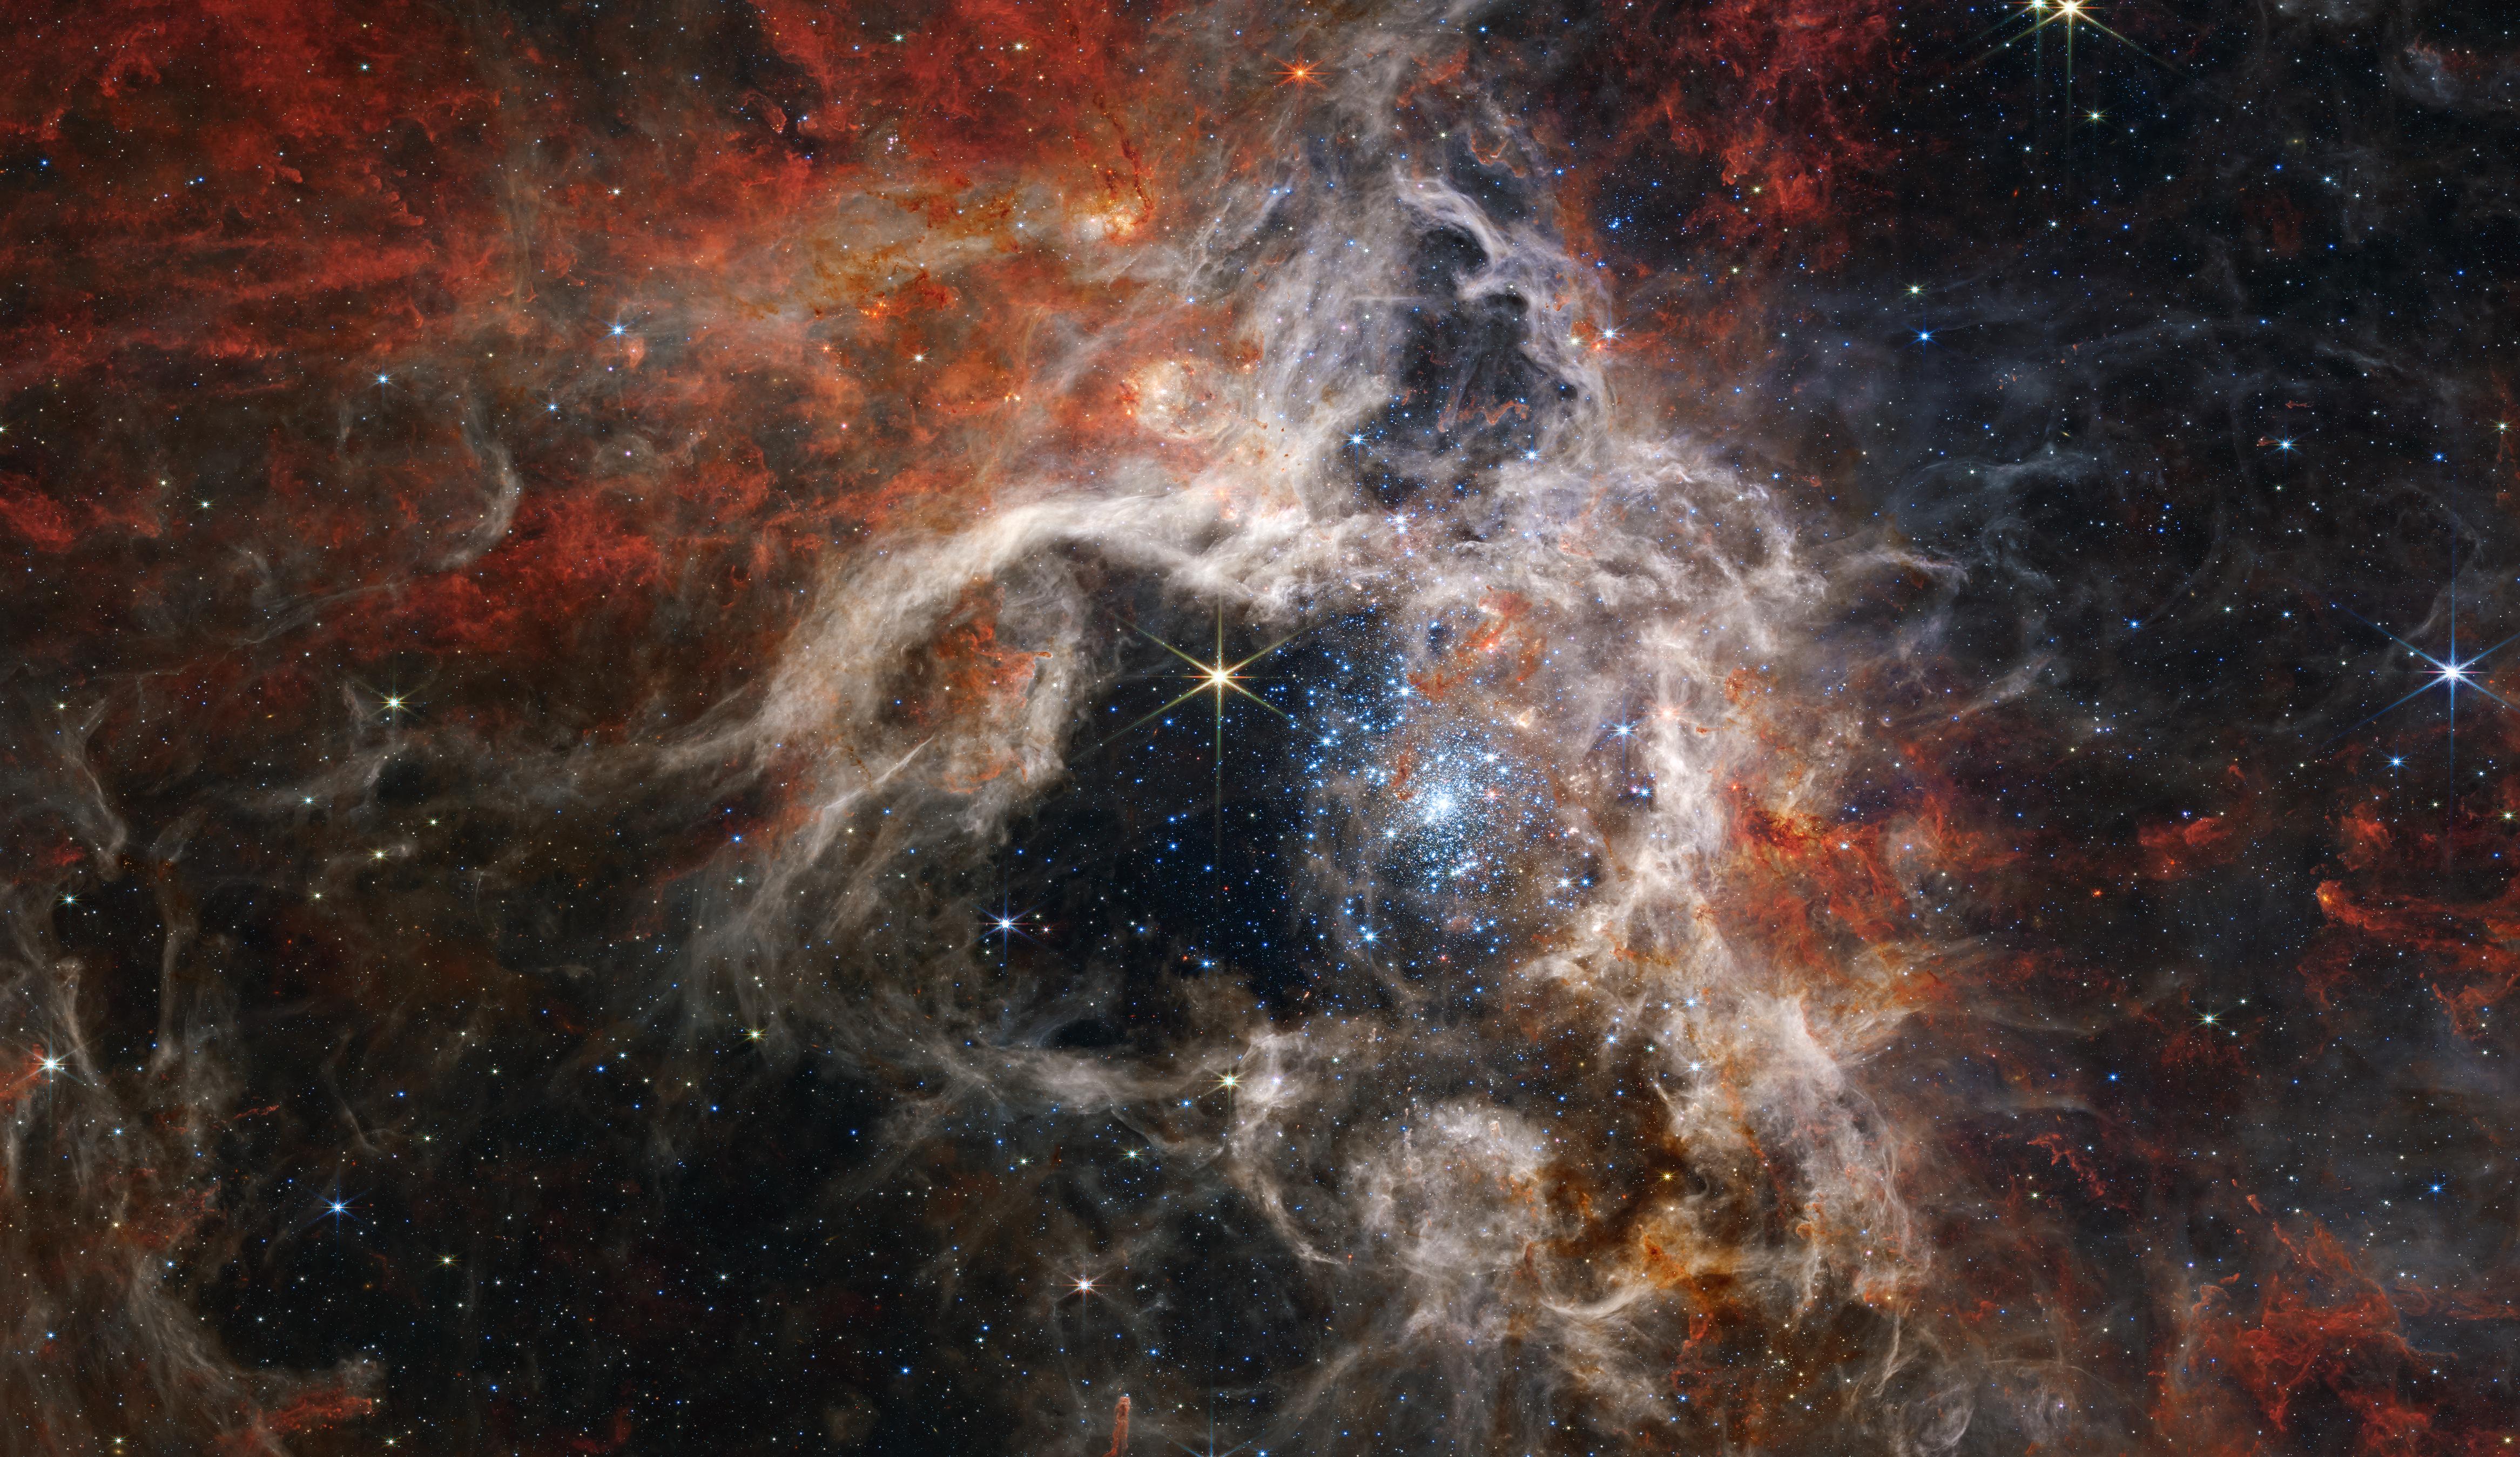 HD wallpaper, Nebula, Infrared, Ngc 2070, Stars, Space, Tarantula Nebula, James Webb Space Telescope